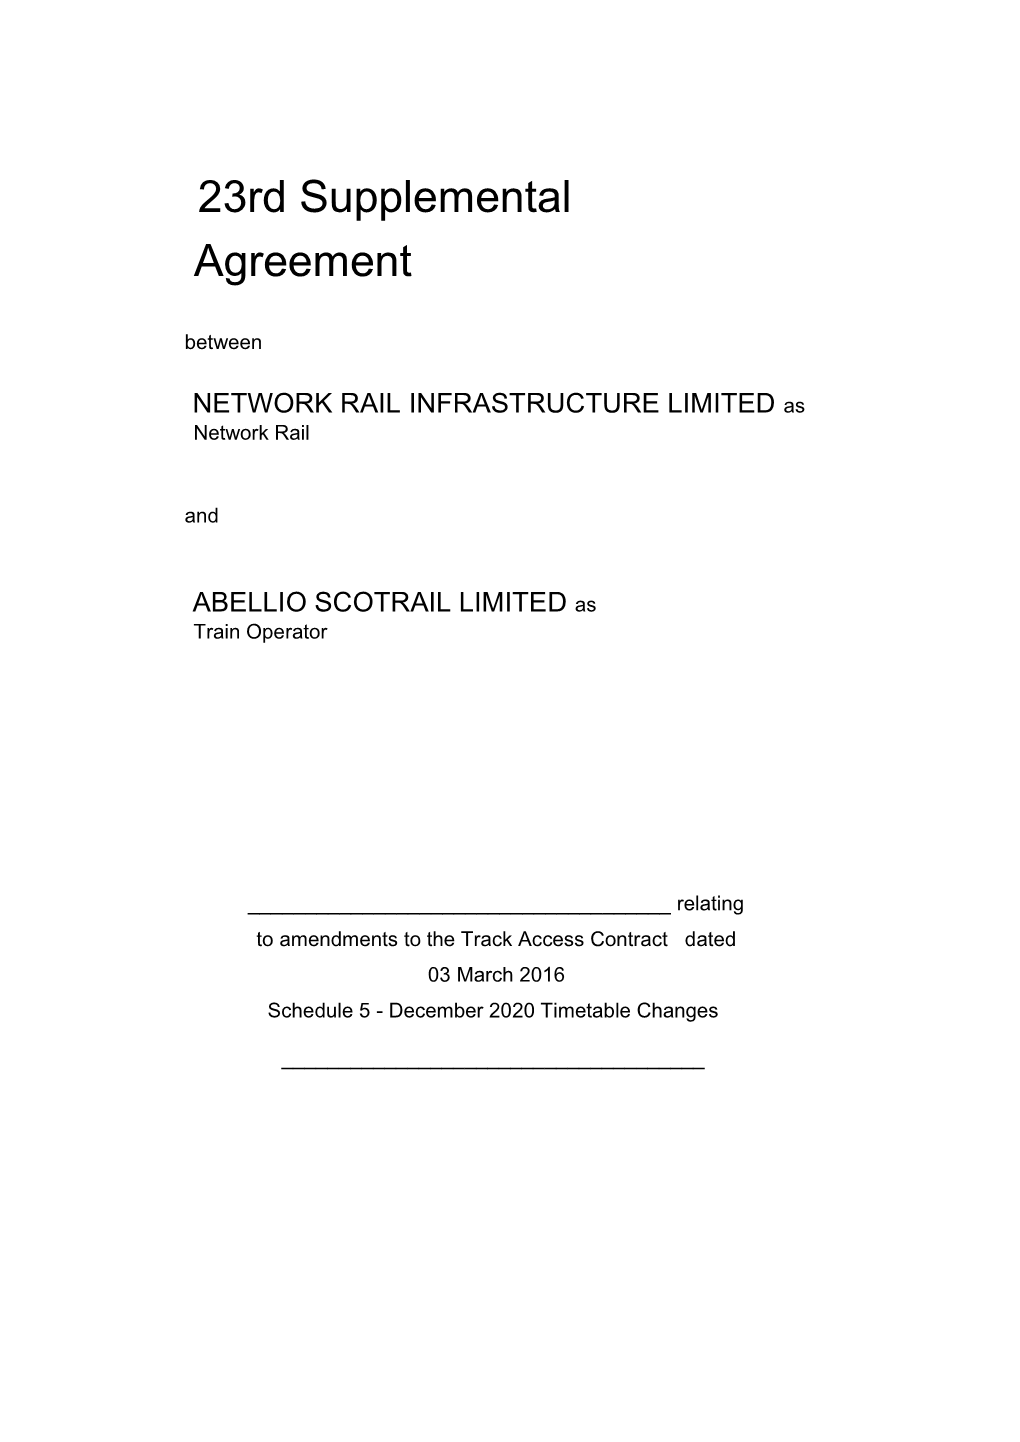 Abellio Scotrail Limited 23Rd Supplemental Agreement